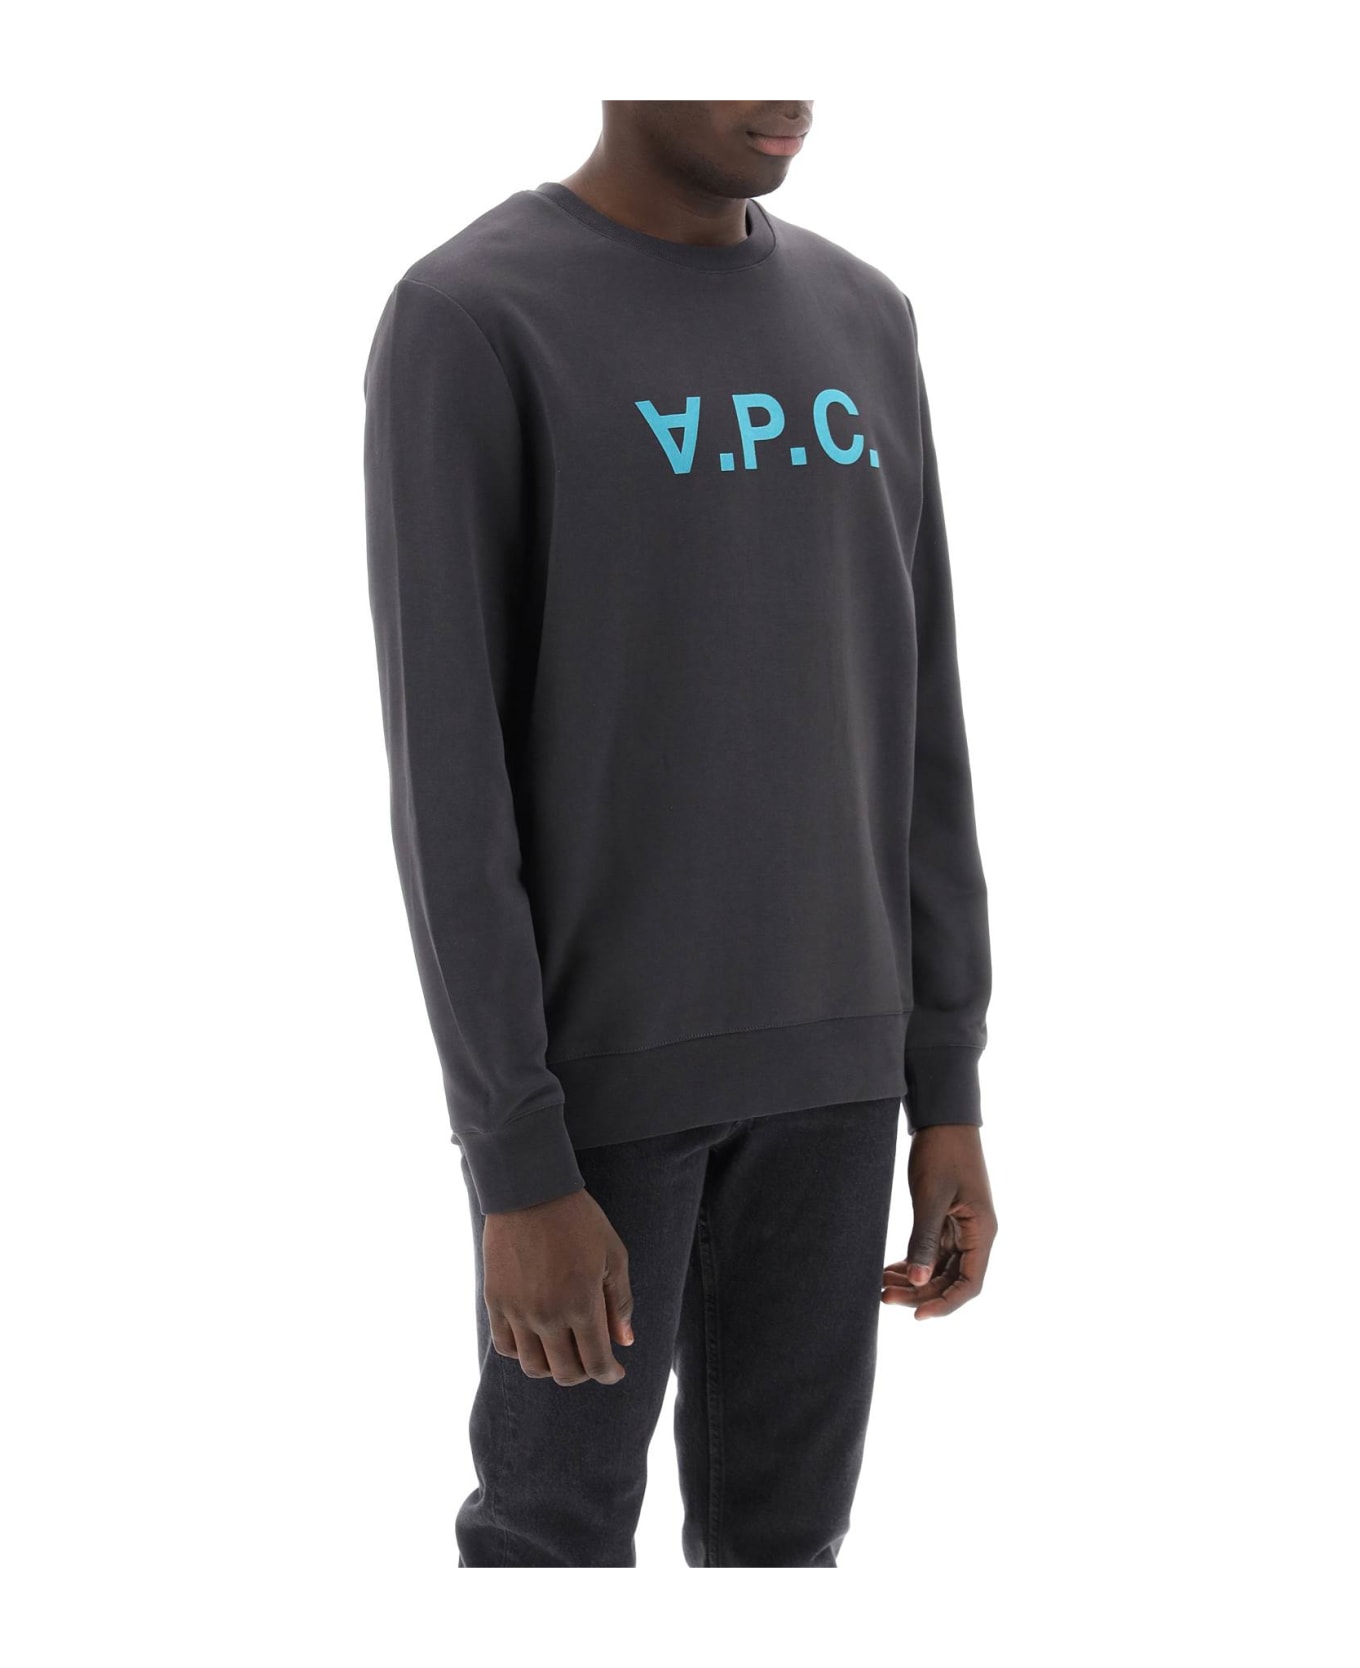 A.P.C. Flock V.p.c. Logo Sweatshirt - ANTHRACITE (Grey) フリース